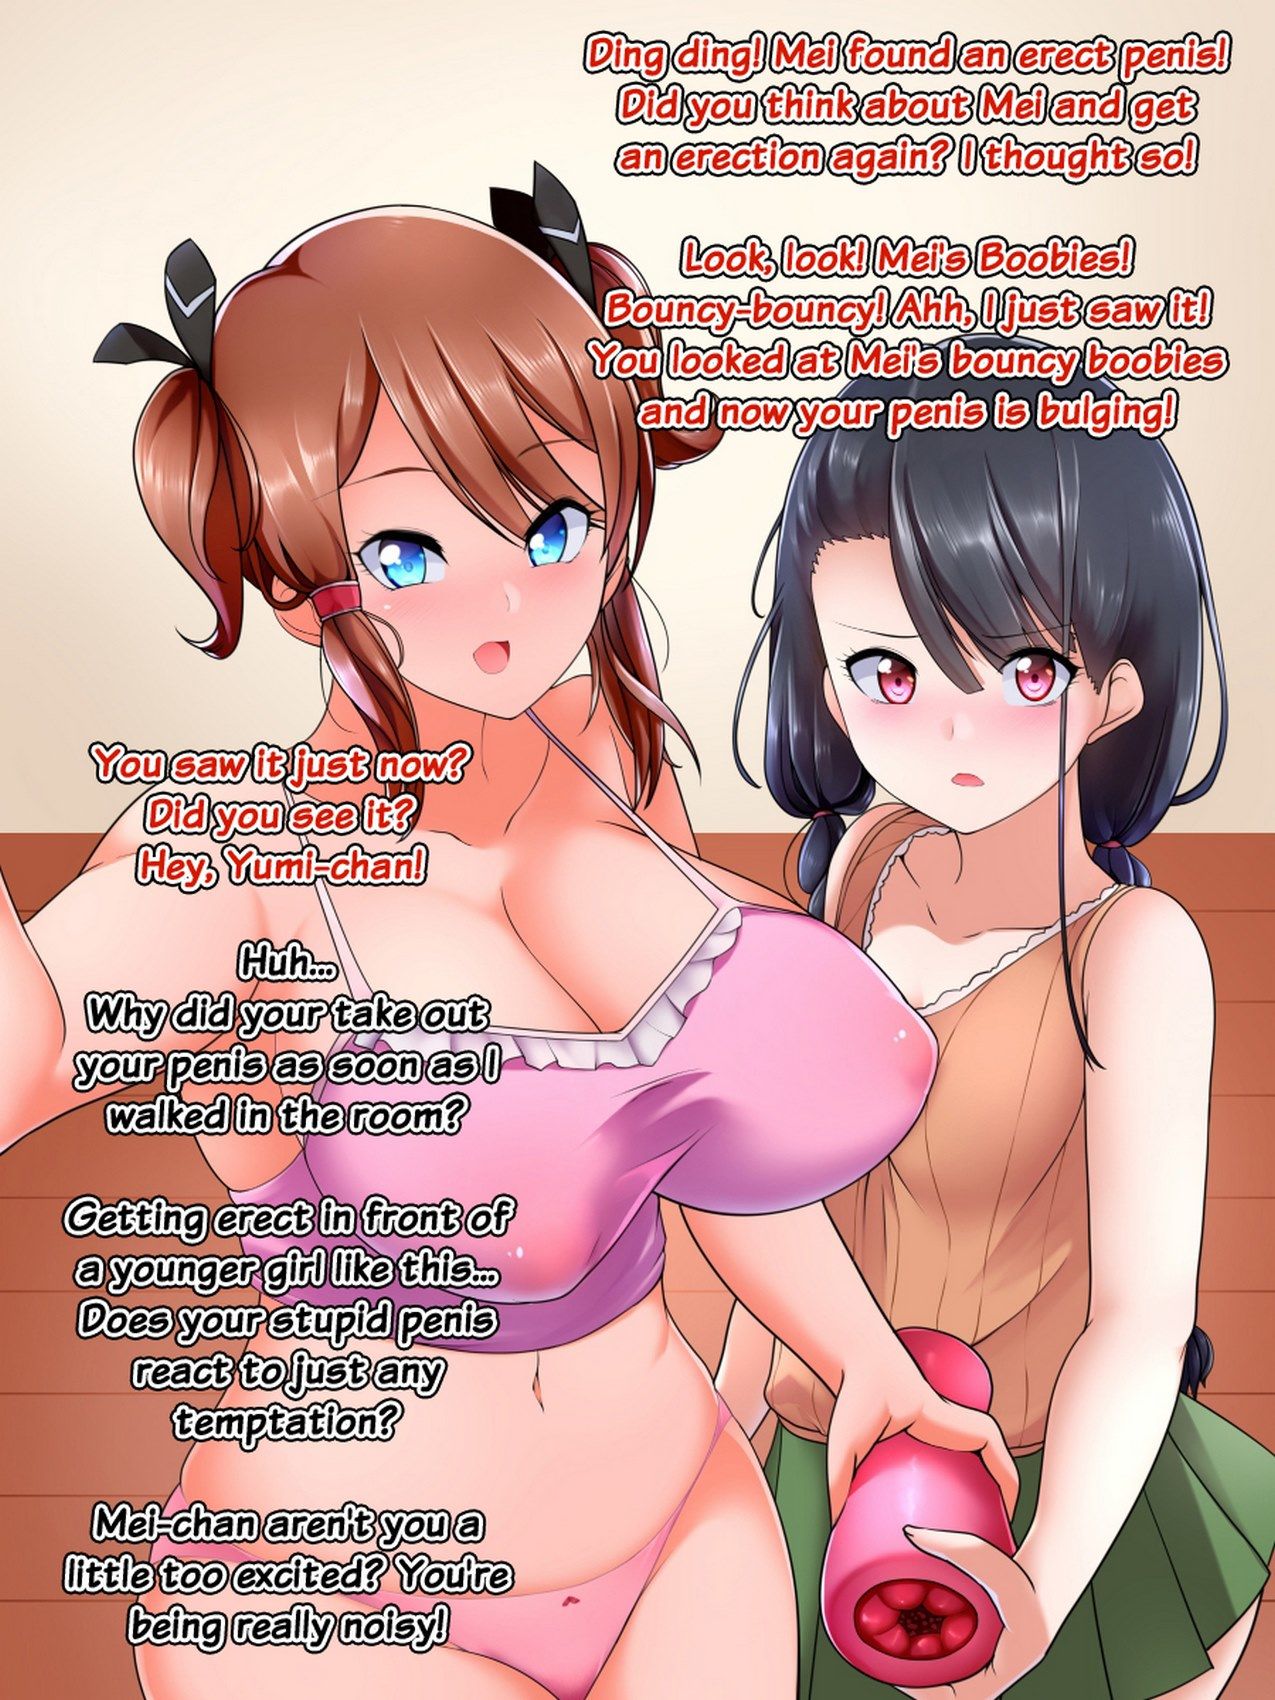 Akamichi - Life as a Masturbation Addic page 45